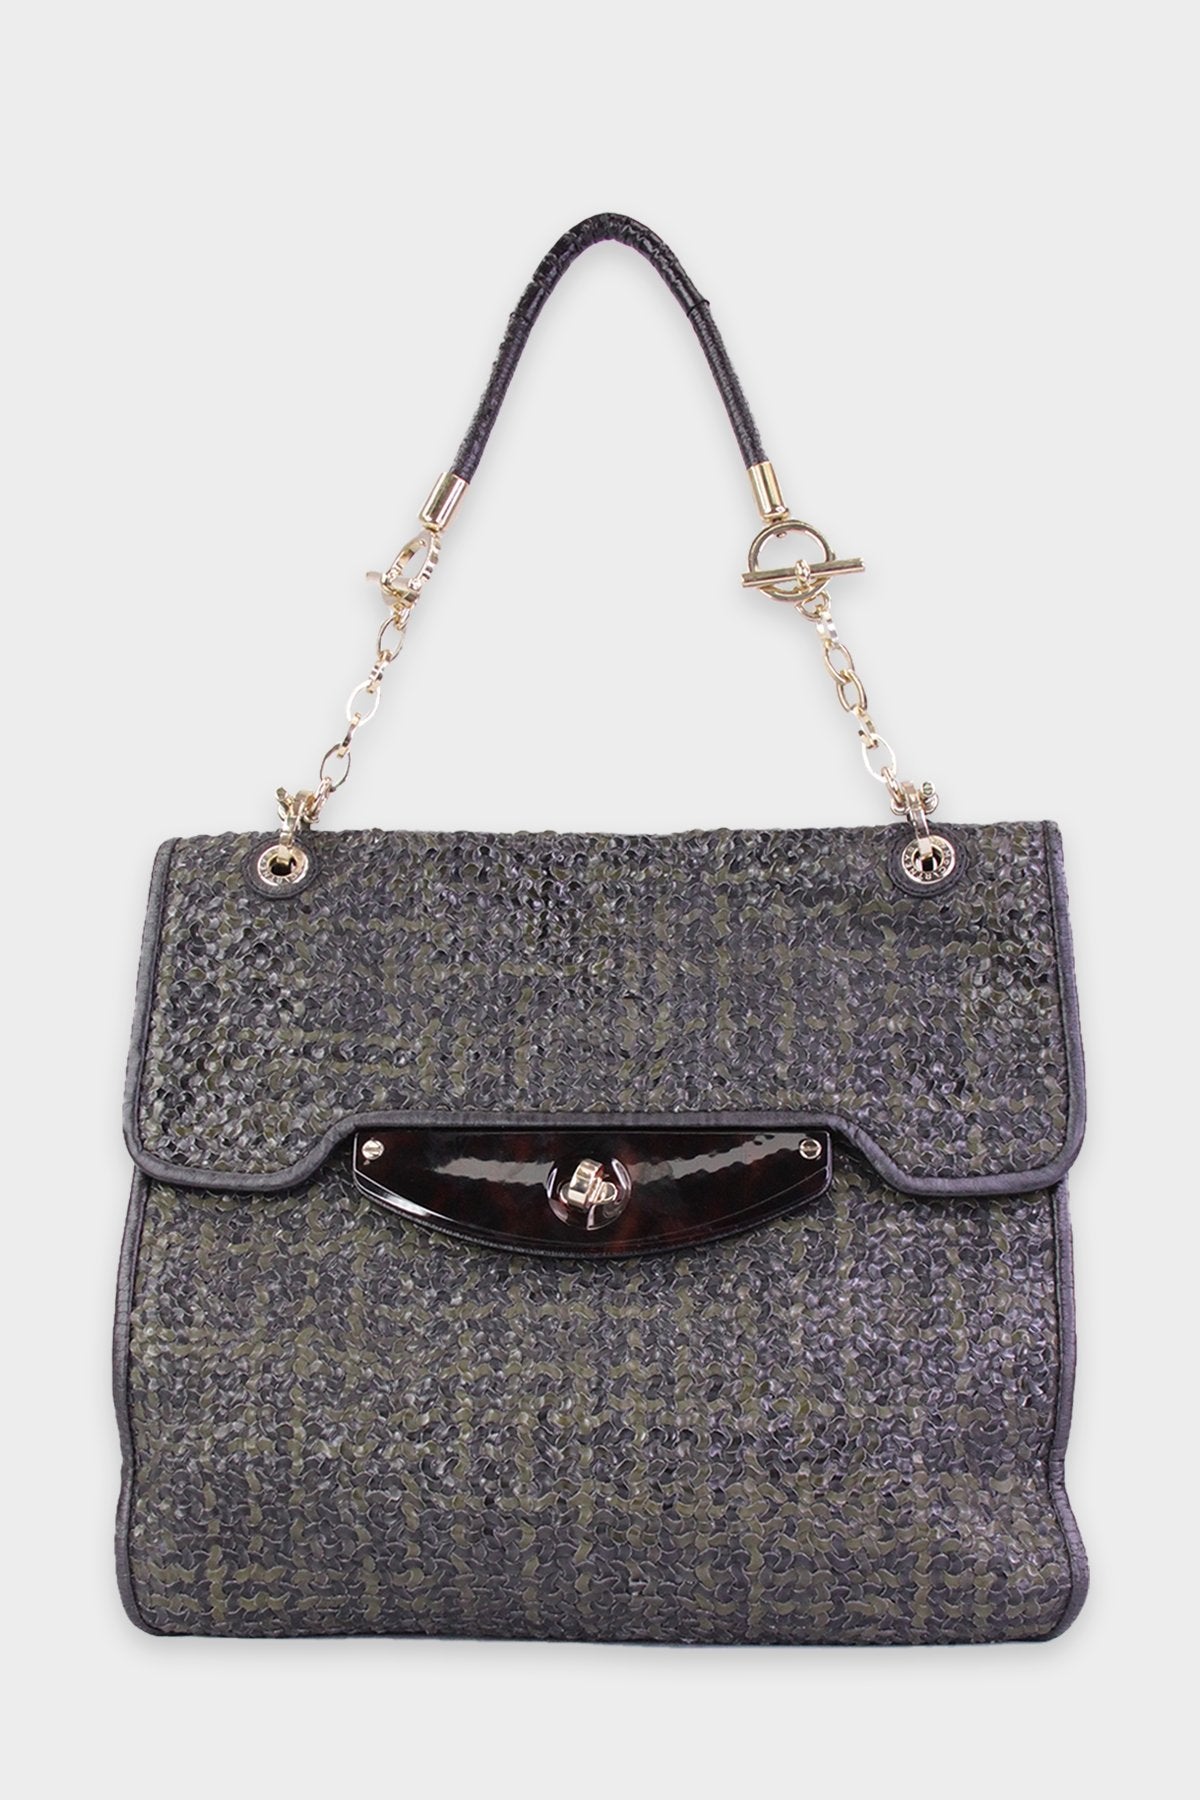 Stella McCartney Green & Black Leather Braided Handbag - shop-olivia.com